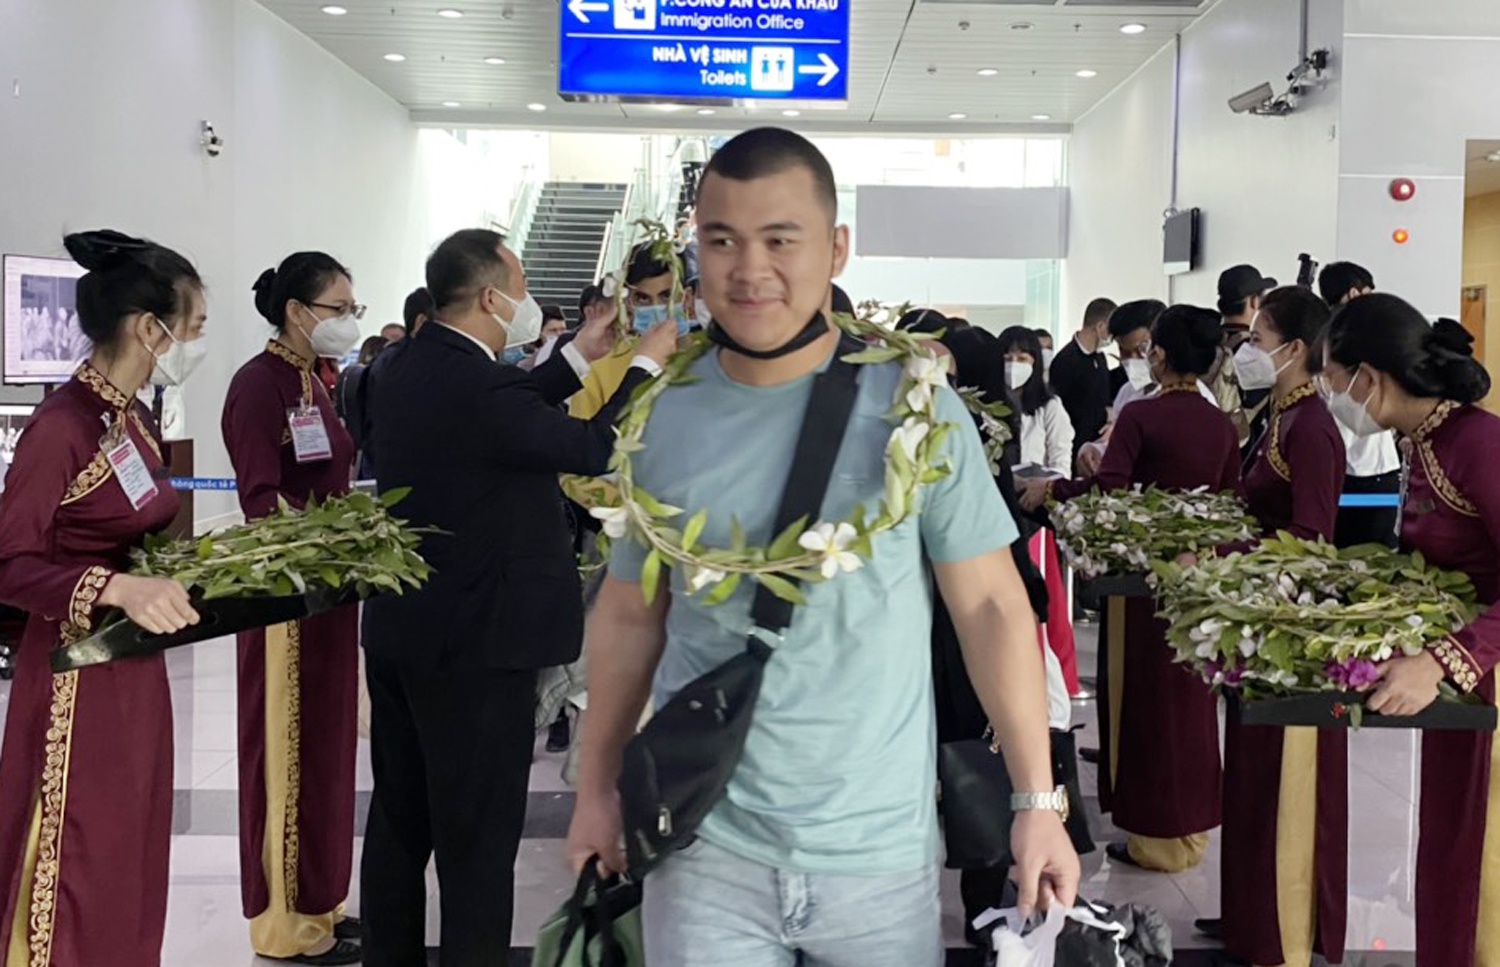 Du lich Phu Quoc hoi sinh anh 1  - du_khach - Du lịch Phú Quốc đang hồi sinh